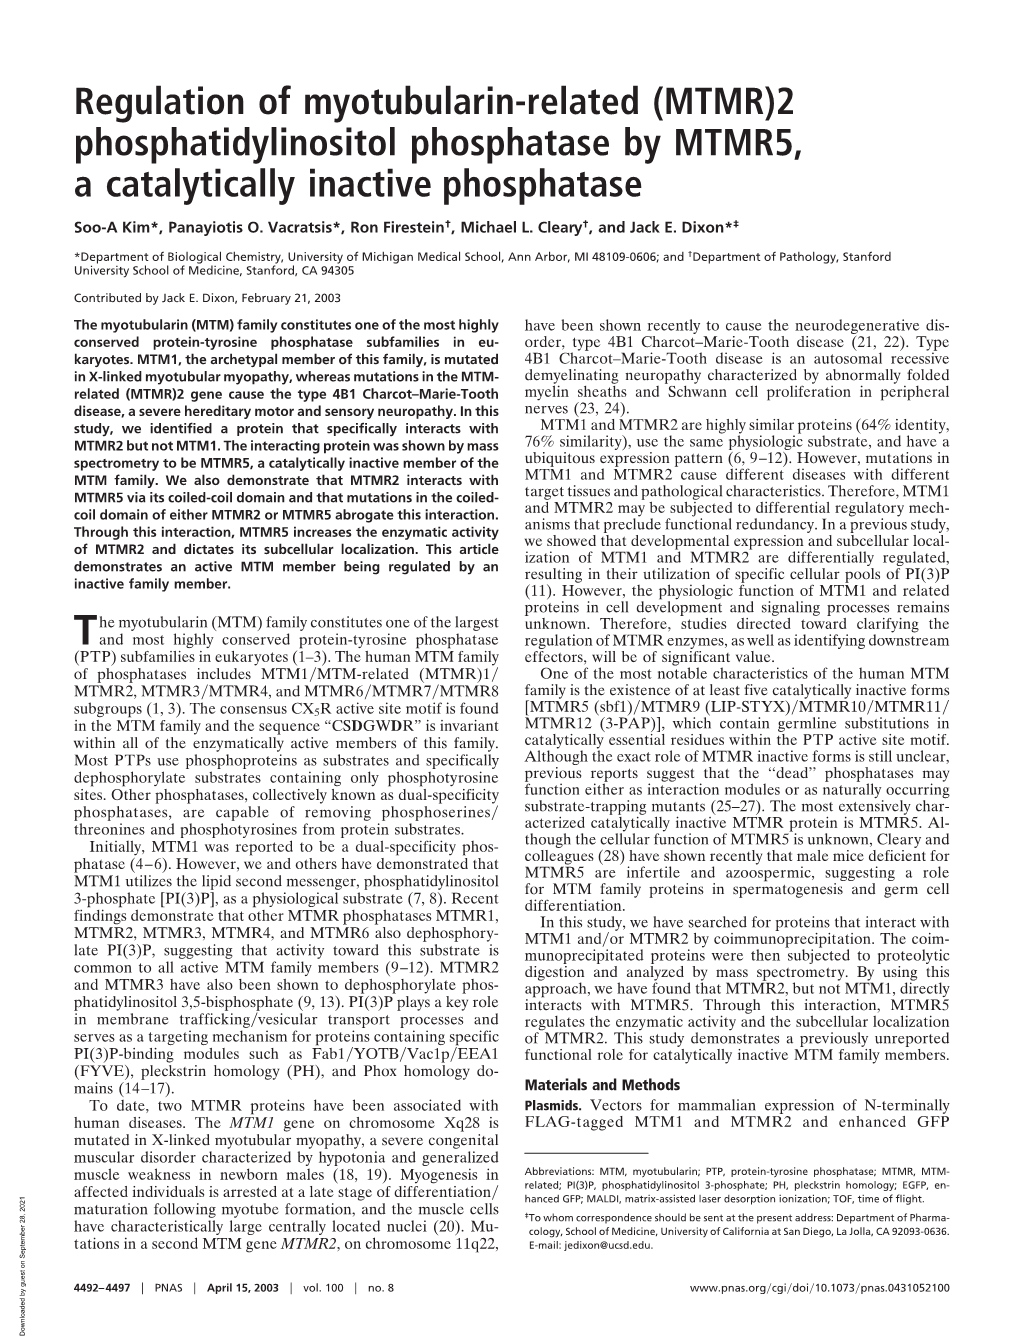 (MTMR)2 Phosphatidylinositol Phosphatase by MTMR5, a Catalytically Inactive Phosphatase